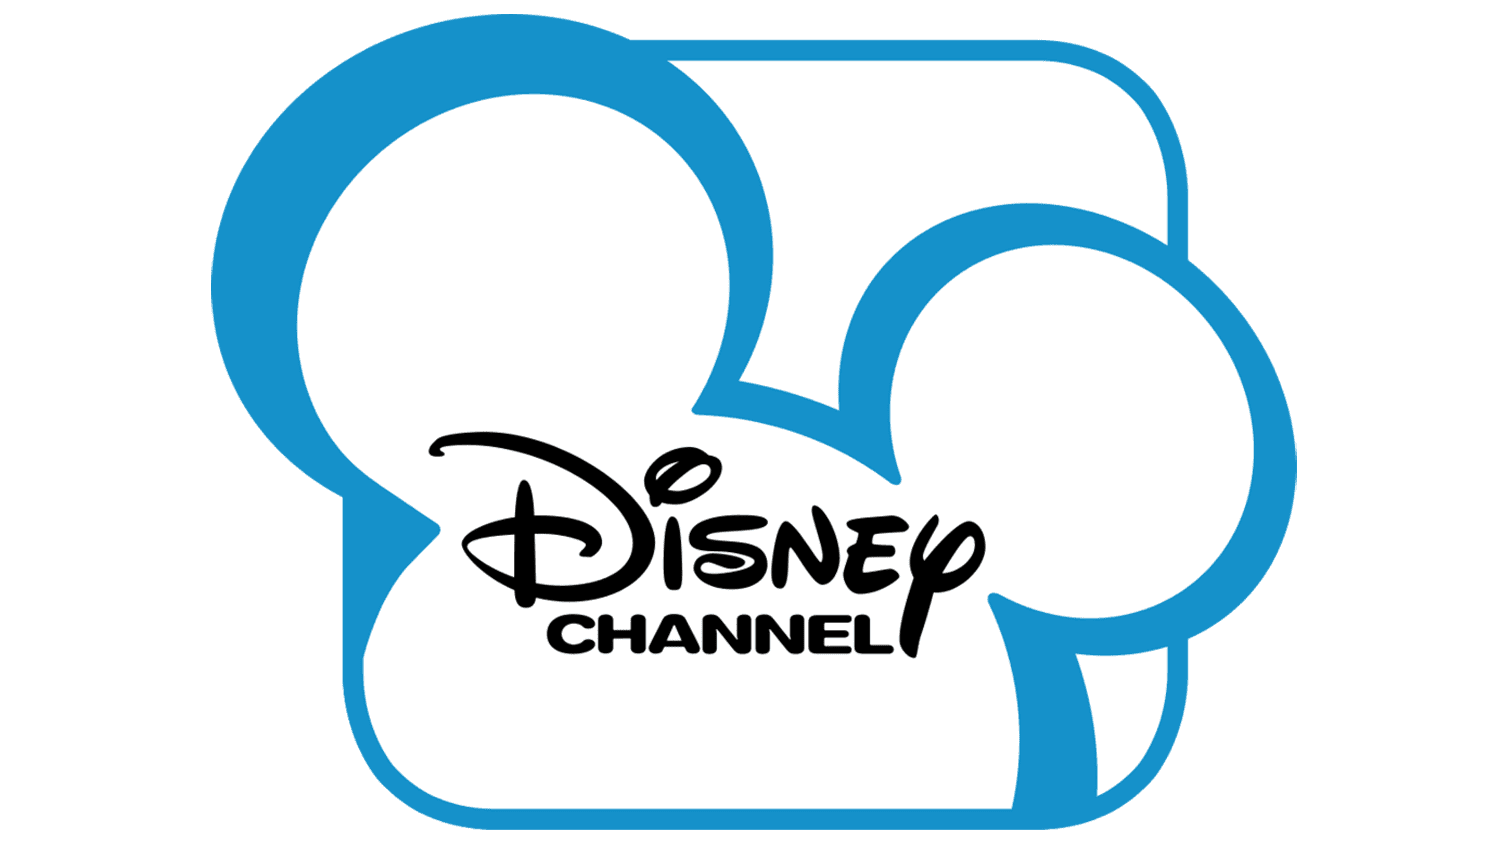 Передач канала дисней. Логотип телеканала канал Disney. Disney канал логотип 2010. Канал Дисней логотип 2021. Канал Дисней 1983.